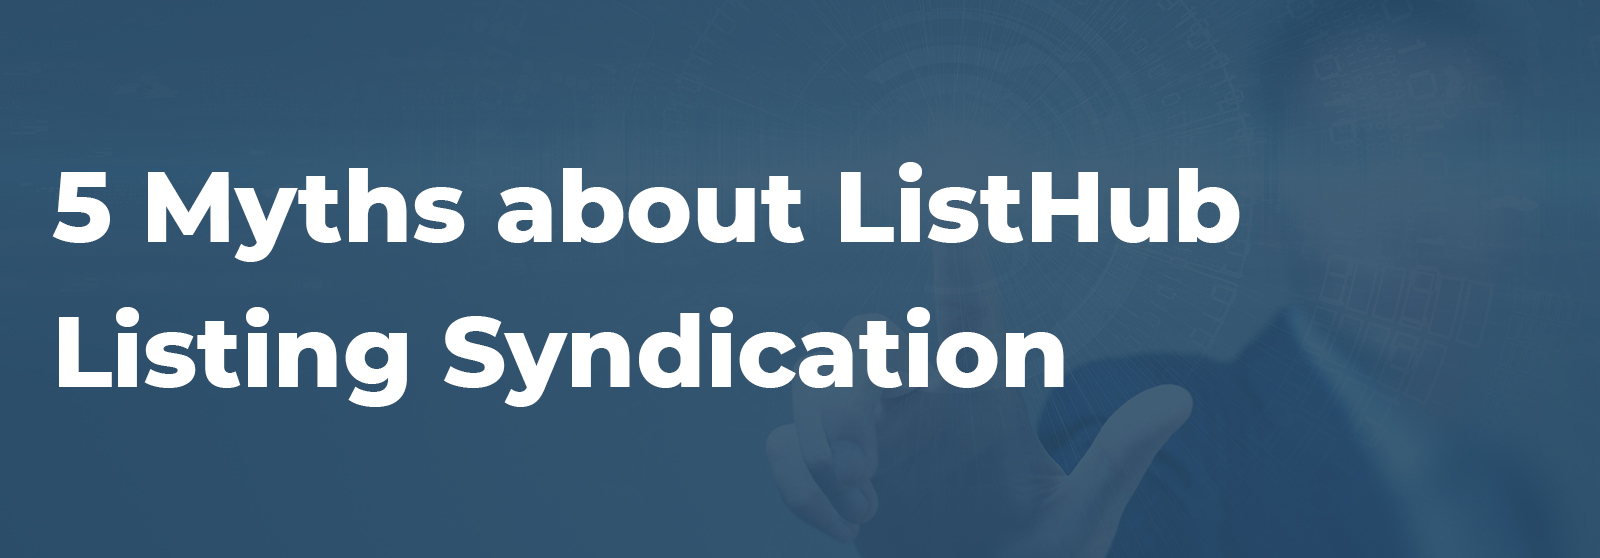 5 Myths About ListHub Listing Syndication